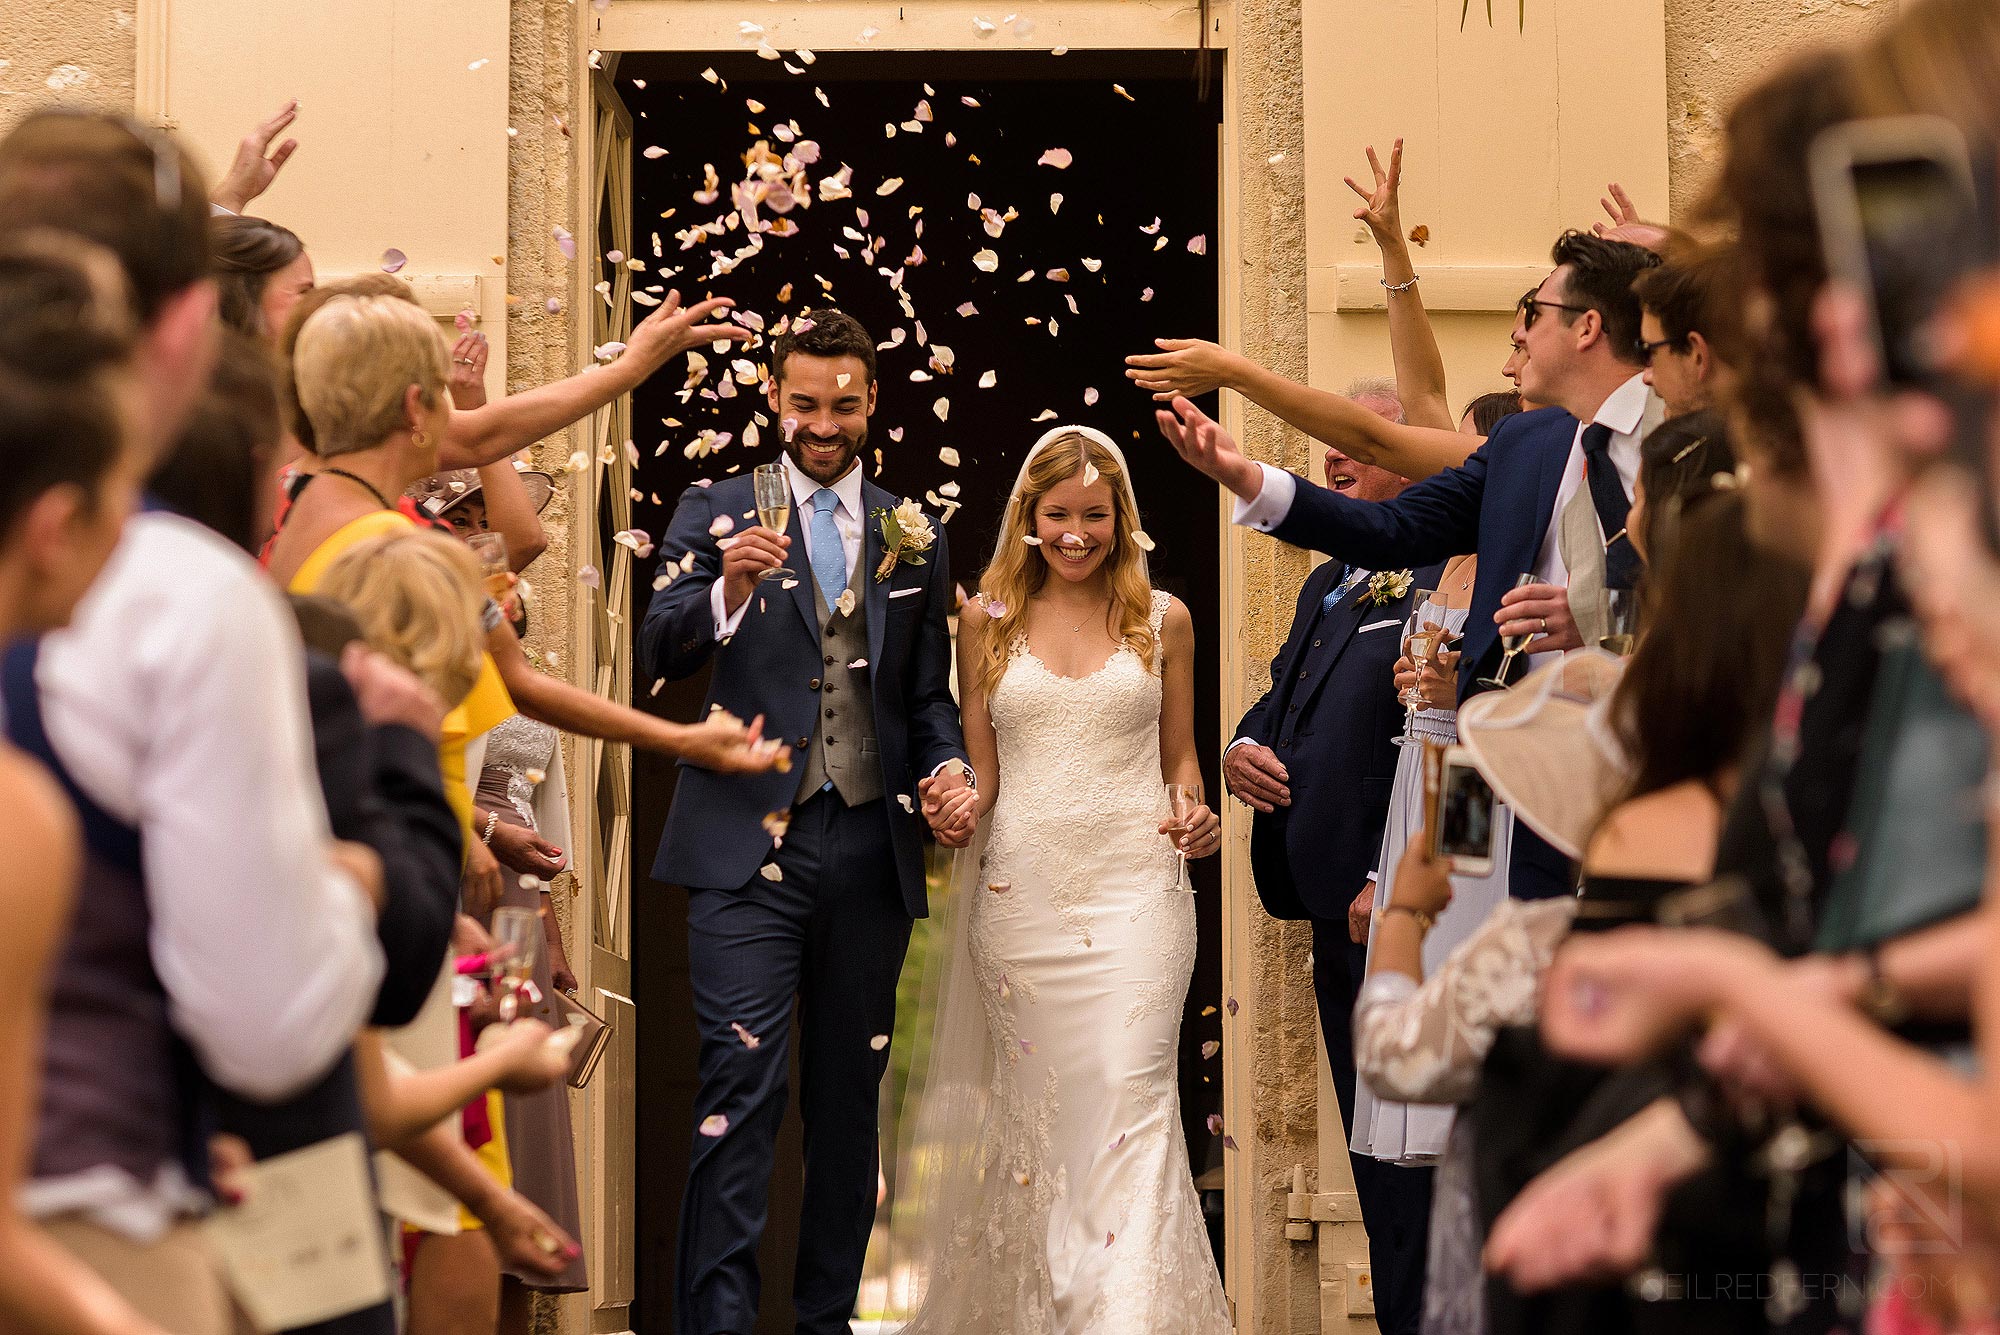 wedding guests throwing confetti